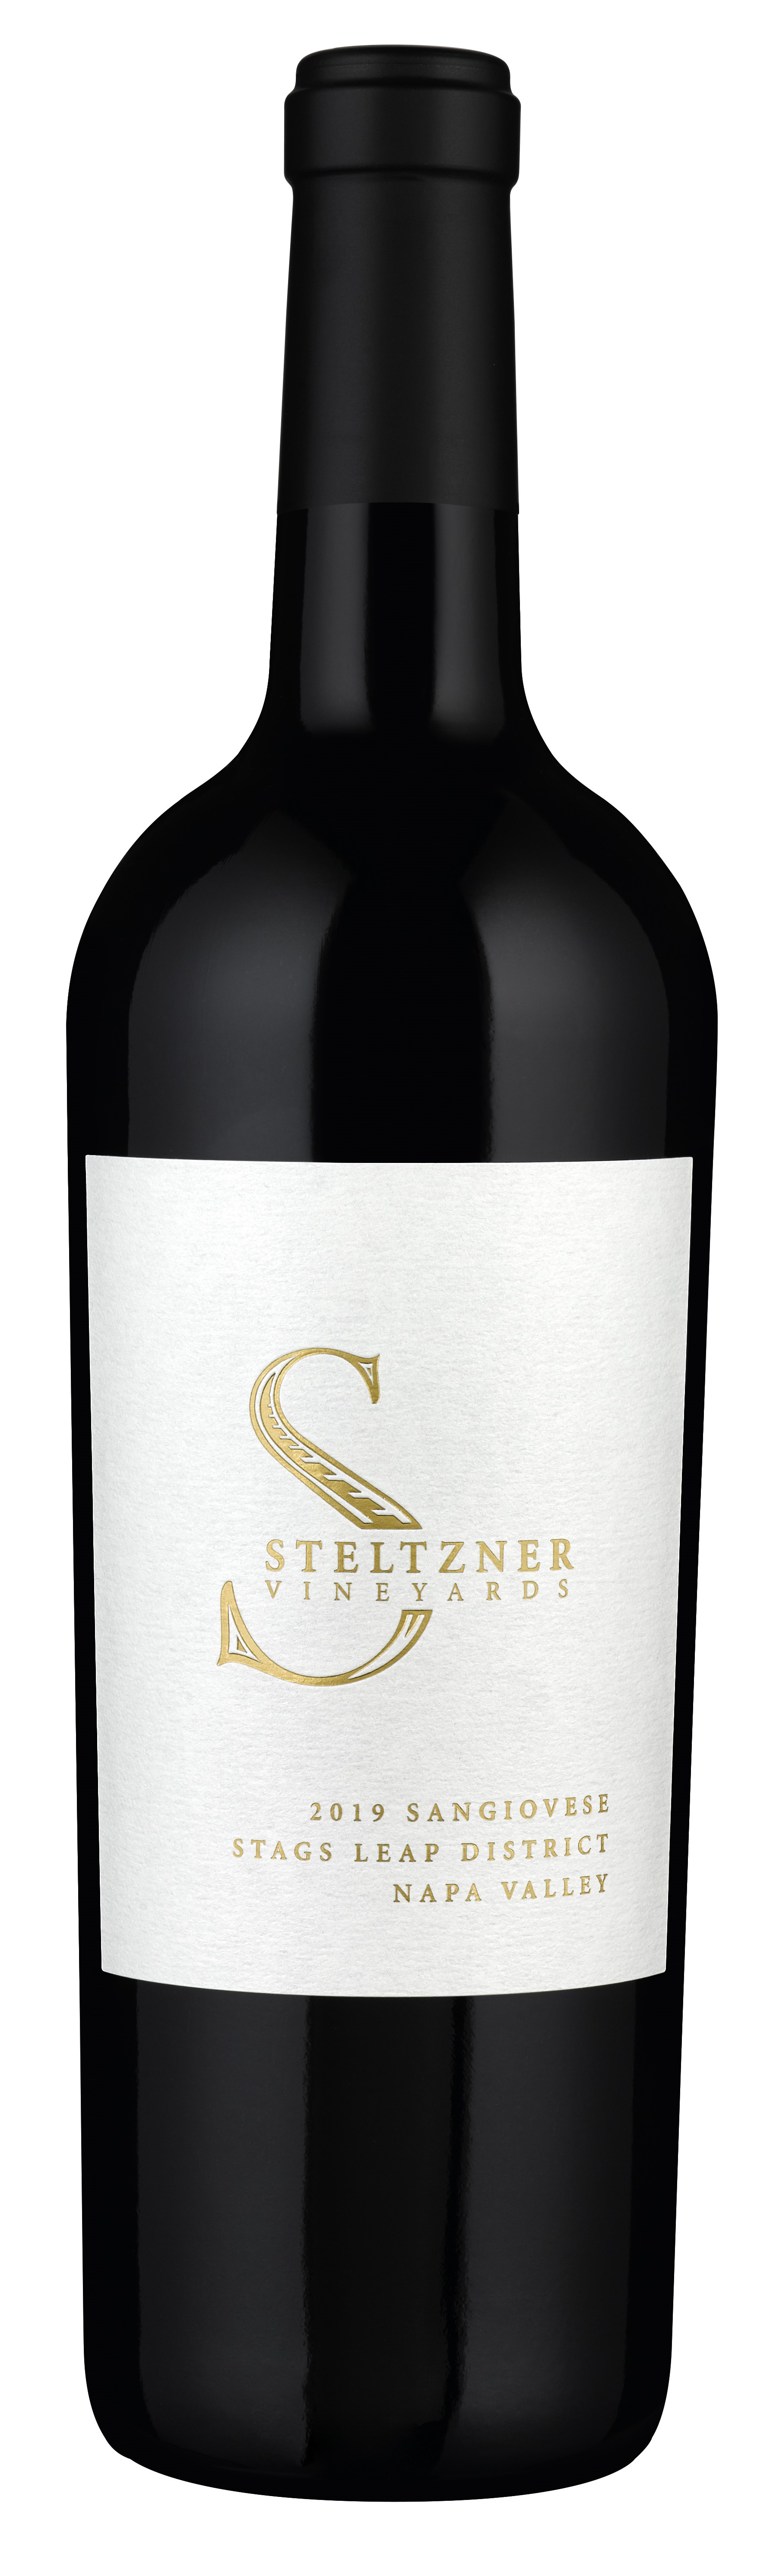 Product Image for 2019 Steltzner Vineyards Sangiovese, SLD